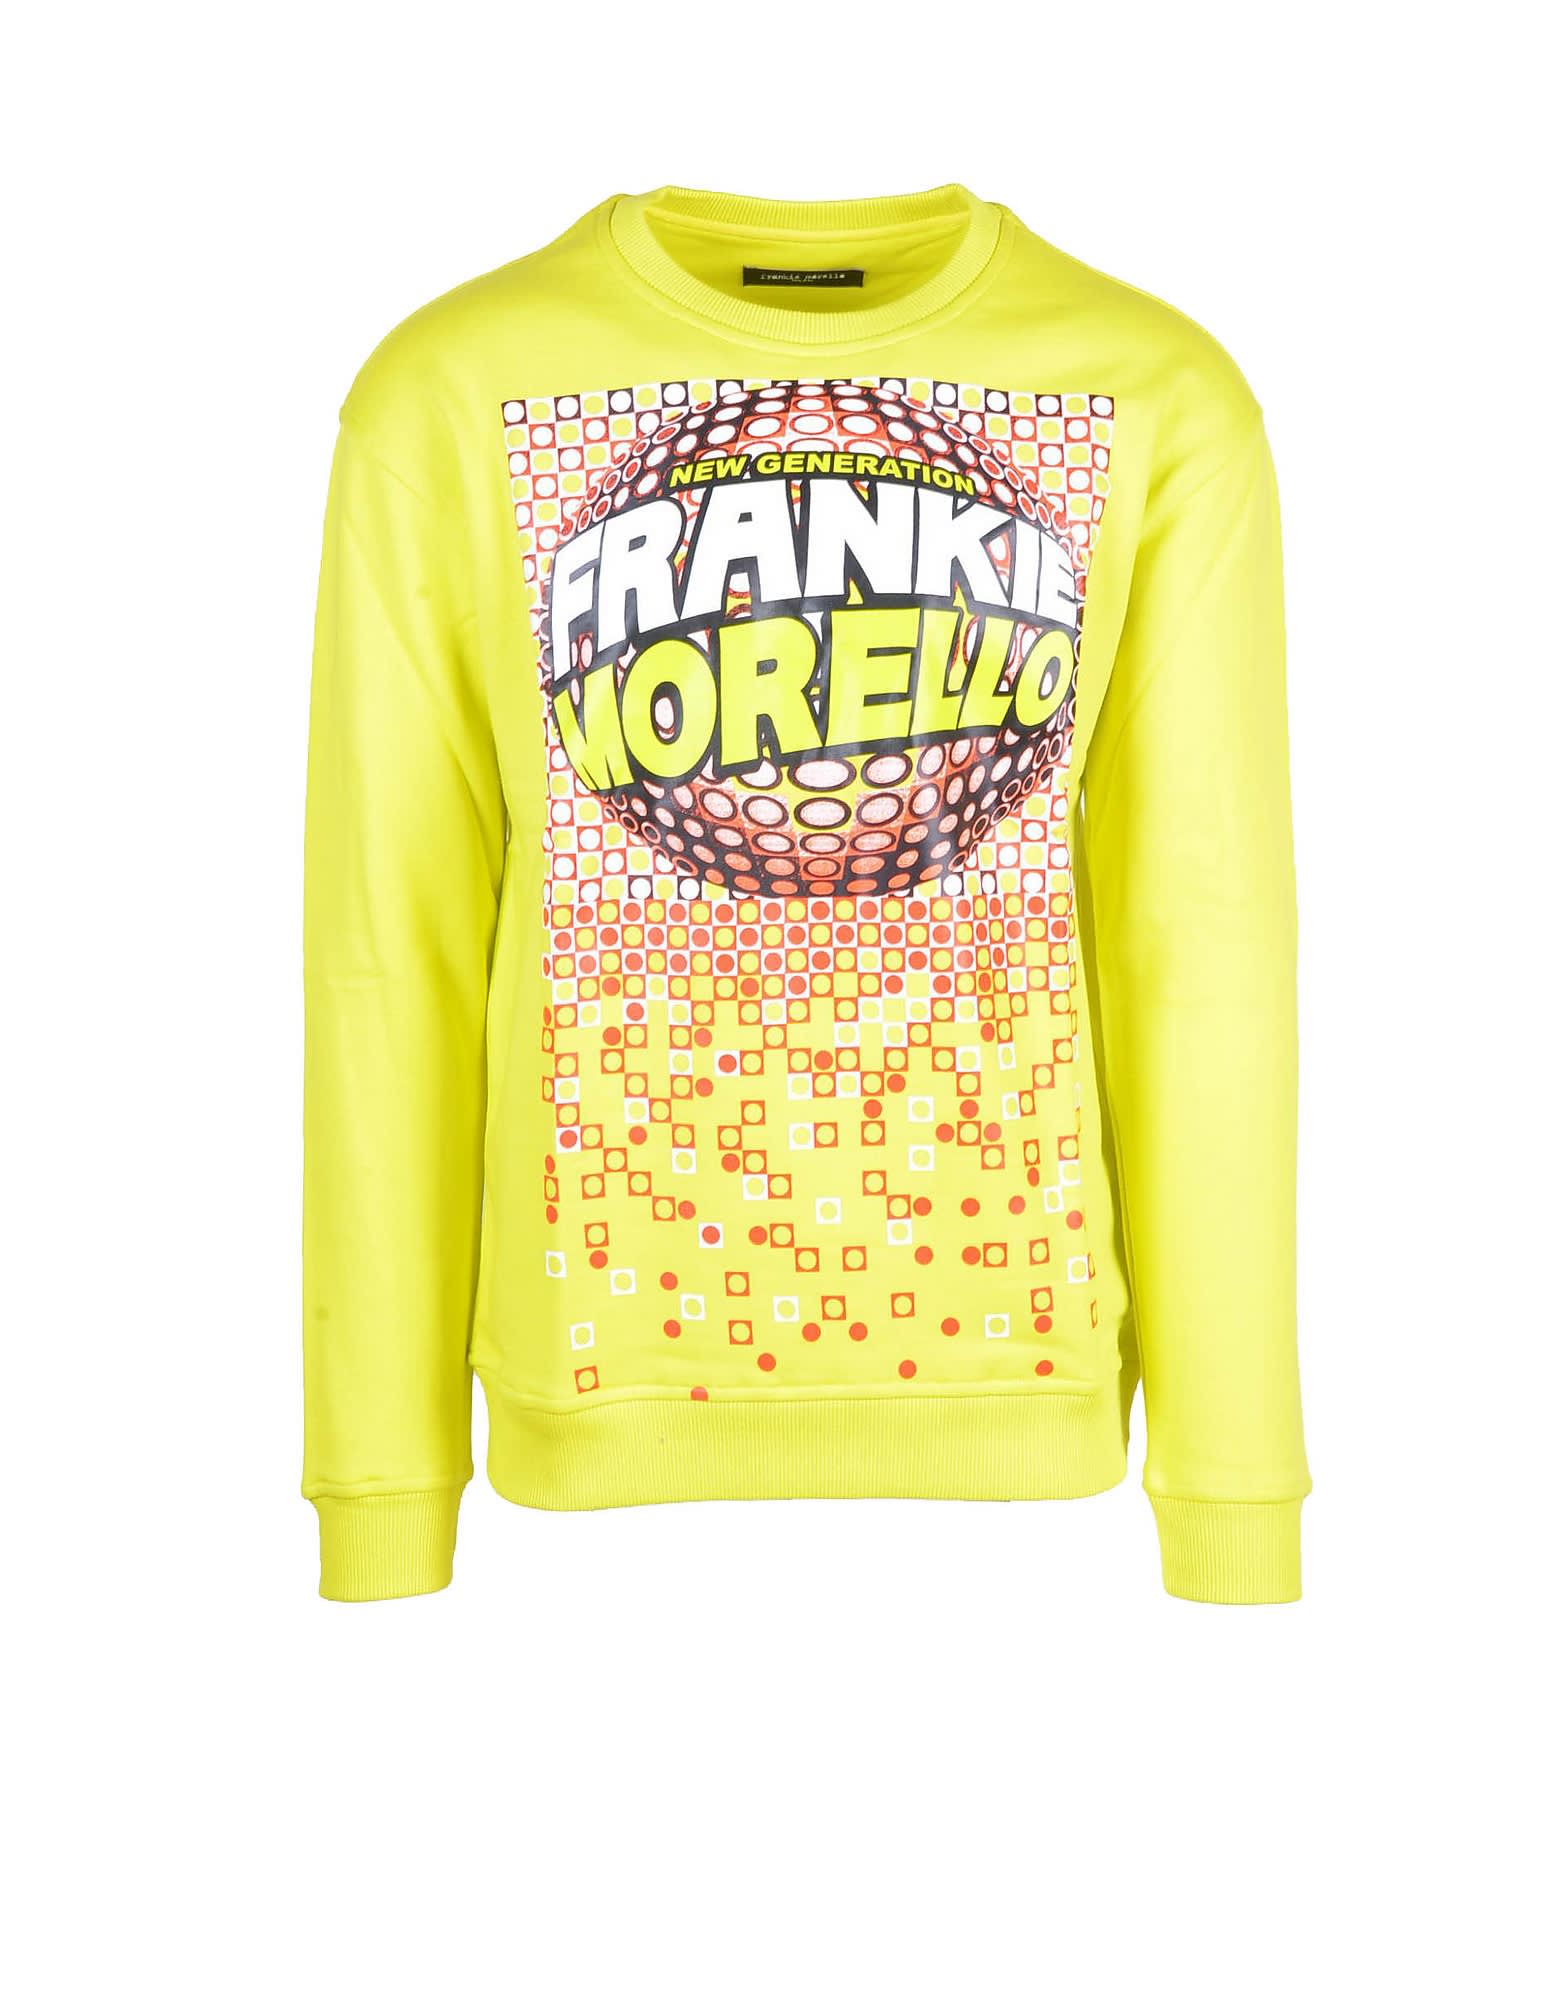 Frankie Morello Mens Yellow Sweatshirt